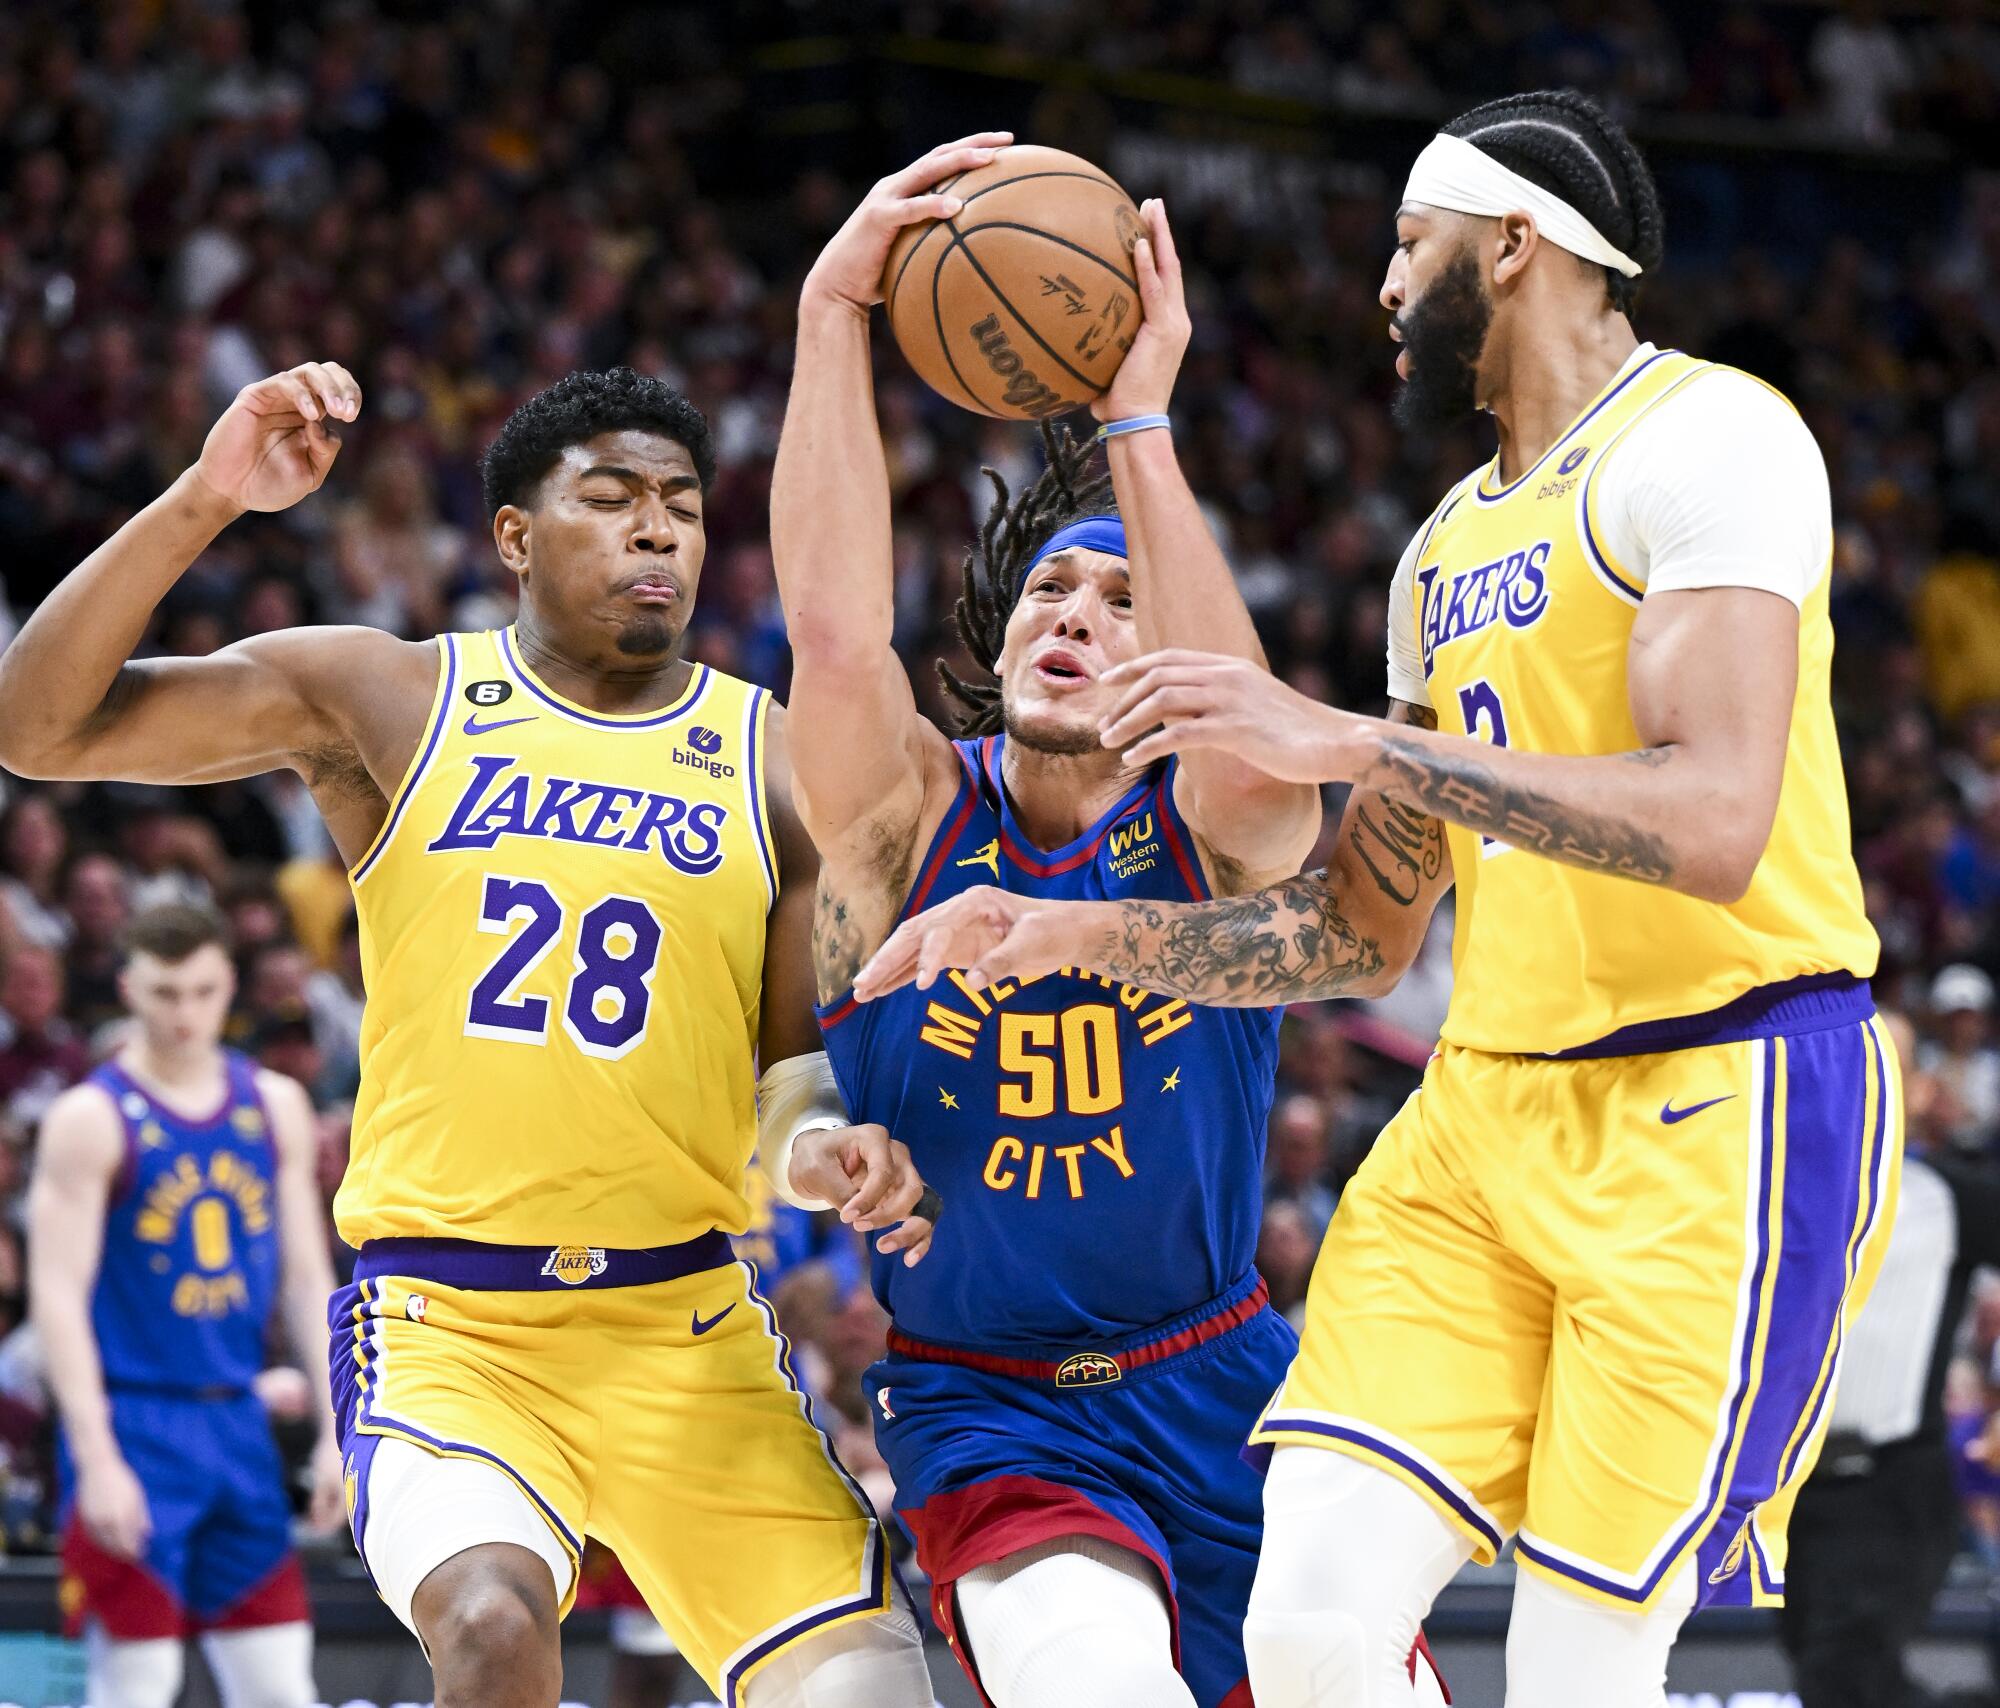 Nuggets forward Aaron Gordon drives to the basket between Lakers forward Rui Hachimura and forward Anthony Davis